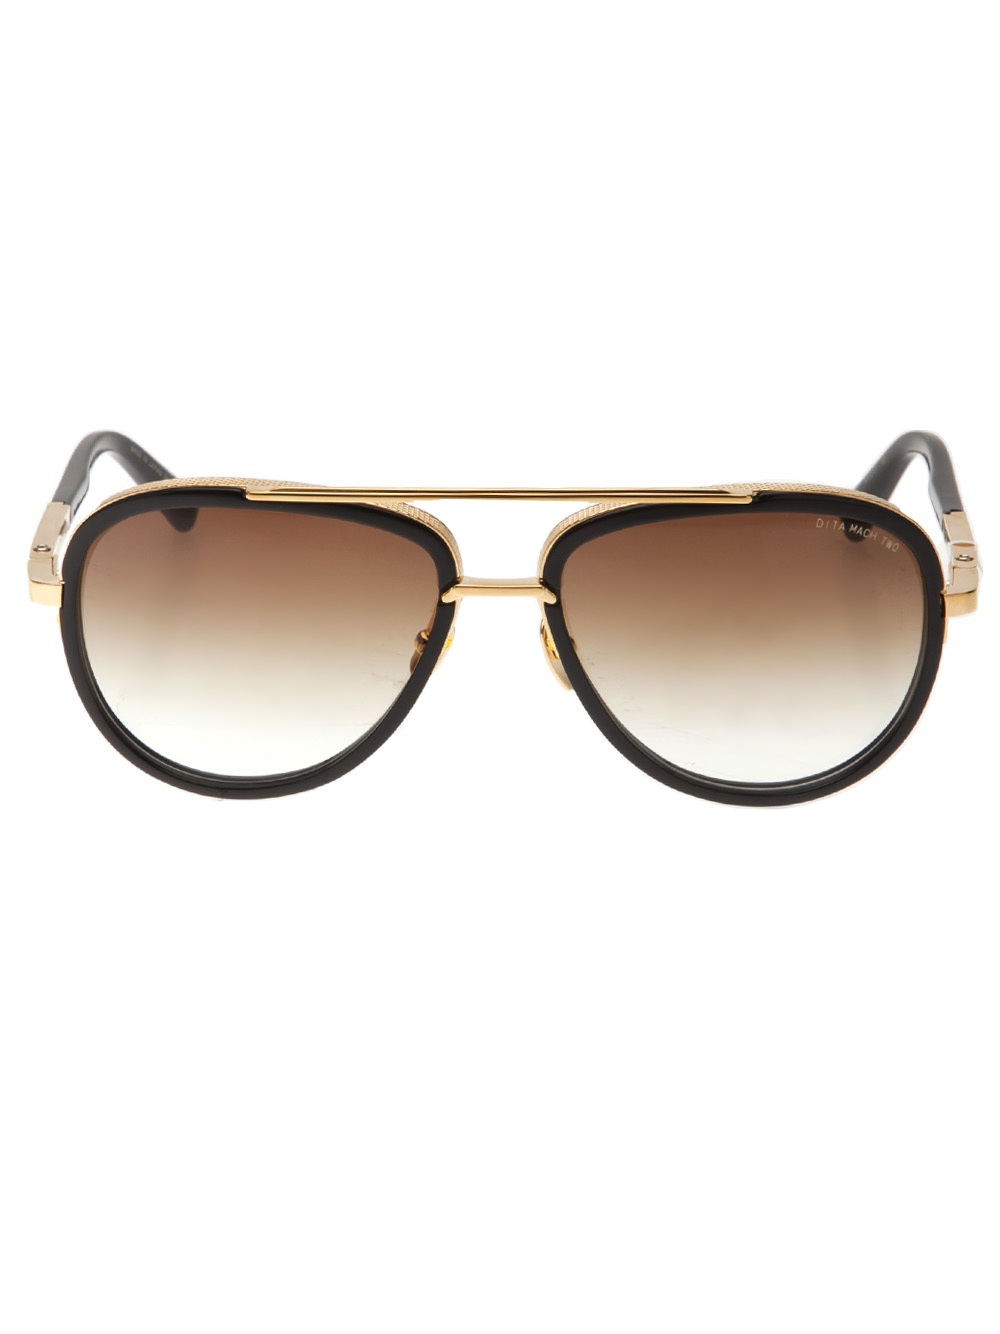 Dita Eyewear Mach Two Sunglasses in Gold (Metallic) for Men - Lyst